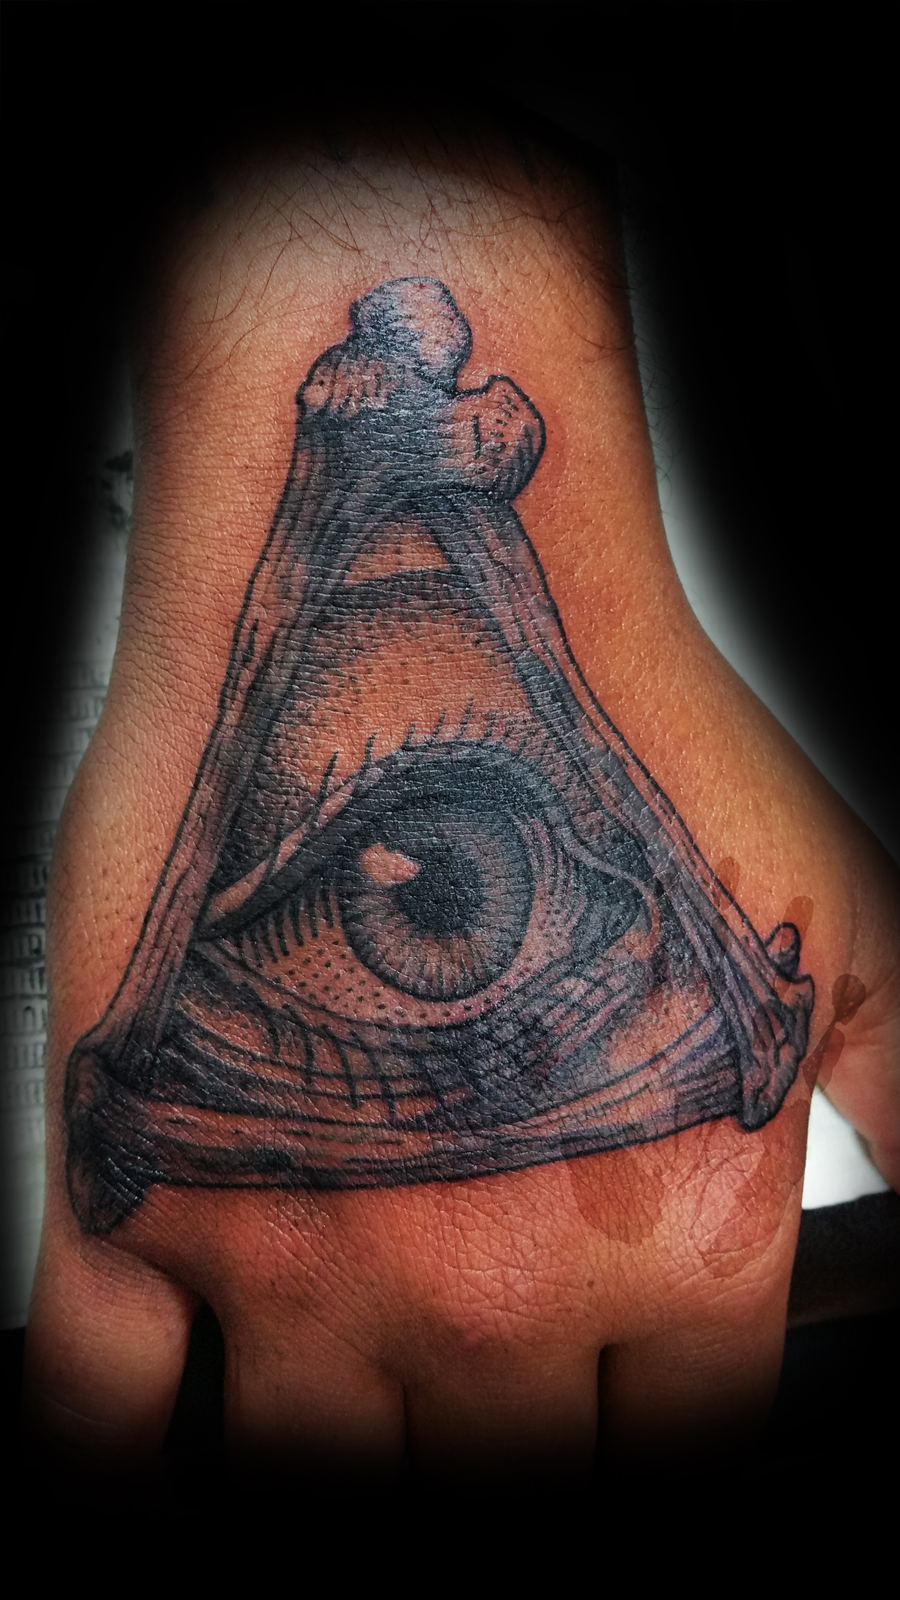 All-Seeing Eye / Third Eye Hand Tattoo by SMHartwork on DeviantArt